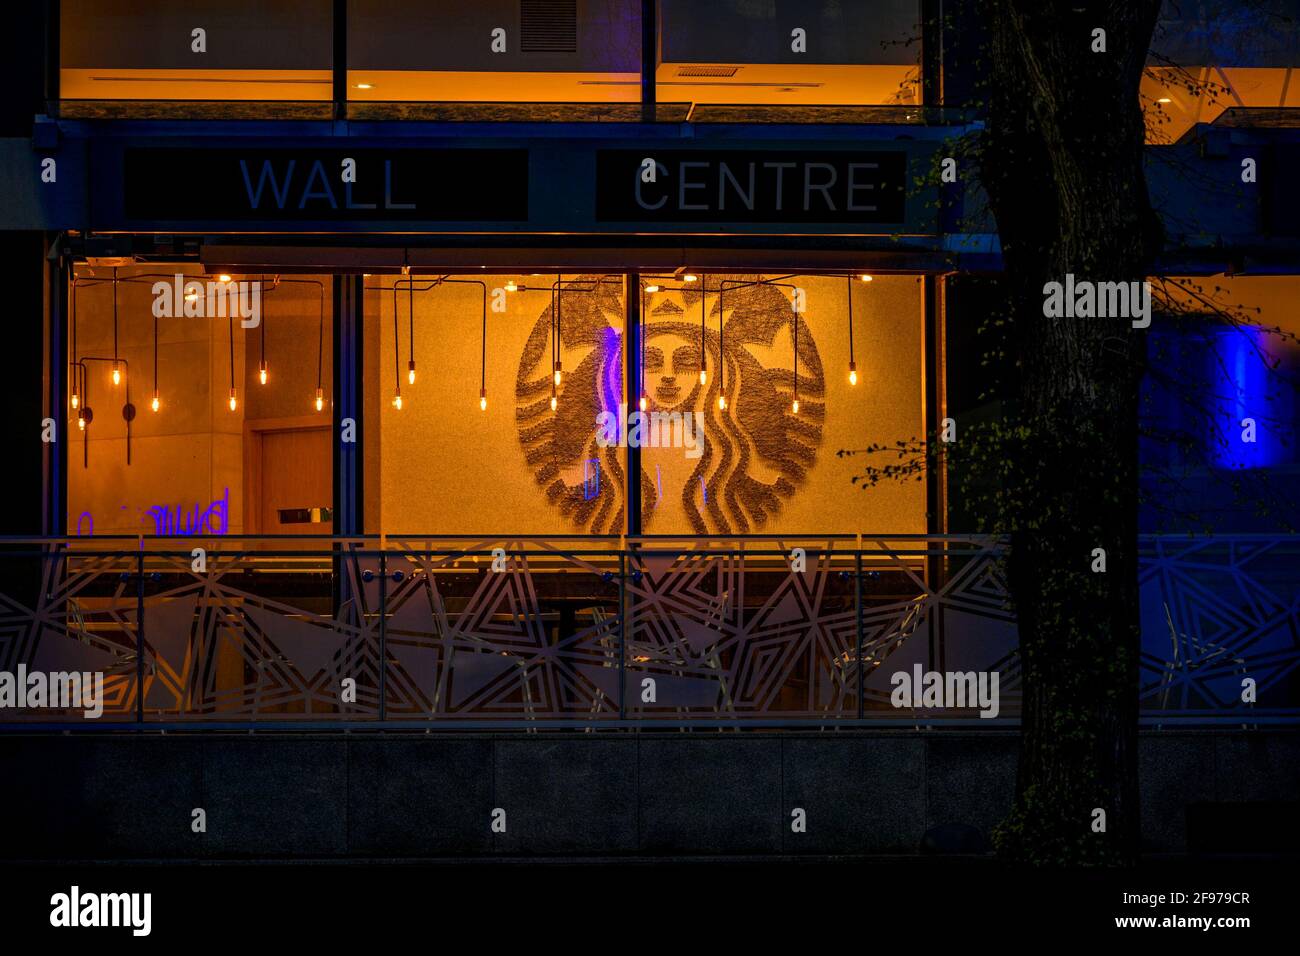 Wall Center Starbucks, Nacht, Innenstadt, Vancouver, British Columbia, Kanada Stockfoto